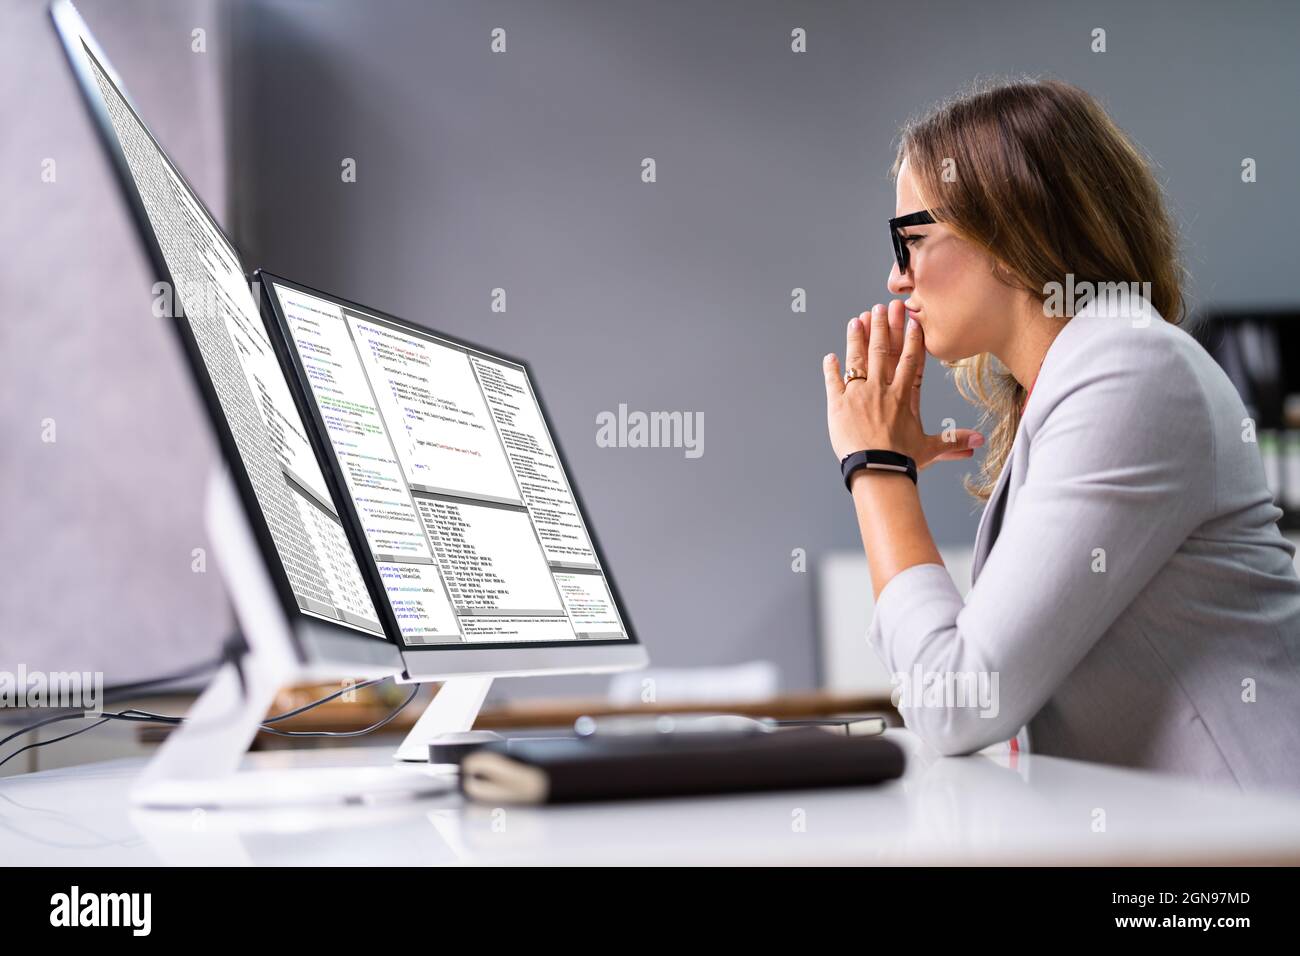 Developer Programmer Woman Coding Software On Computer Stock Photo